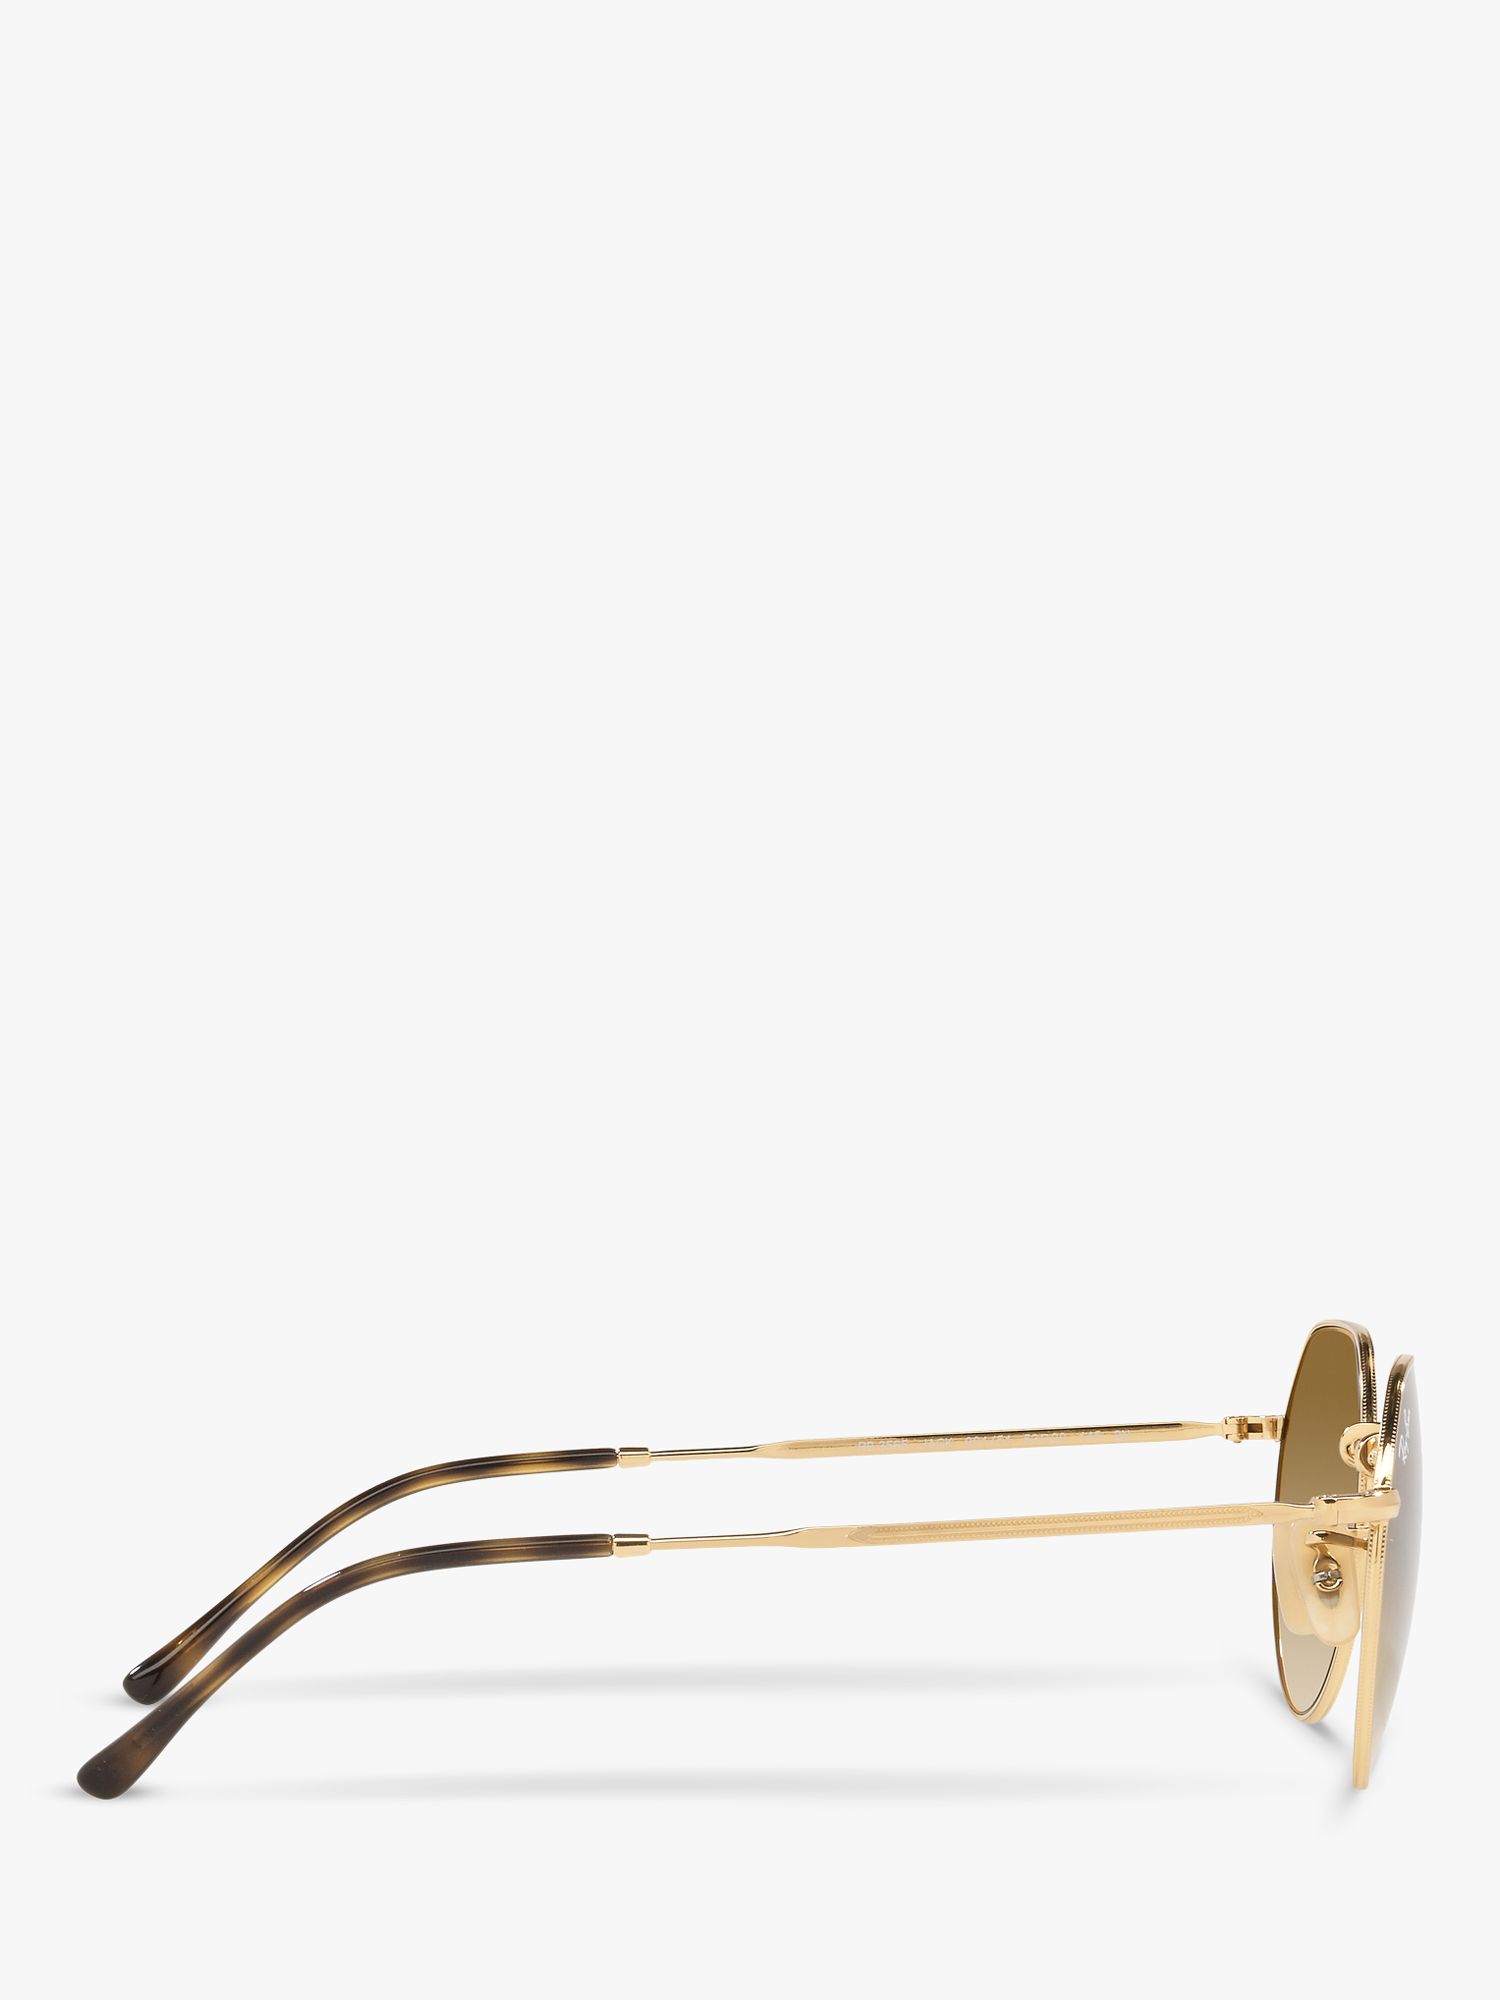 Ray-Ban RB3565 Jack Unisex Metal Hexagonal Sunglasses, Arista Gold/Light Brown Gradient